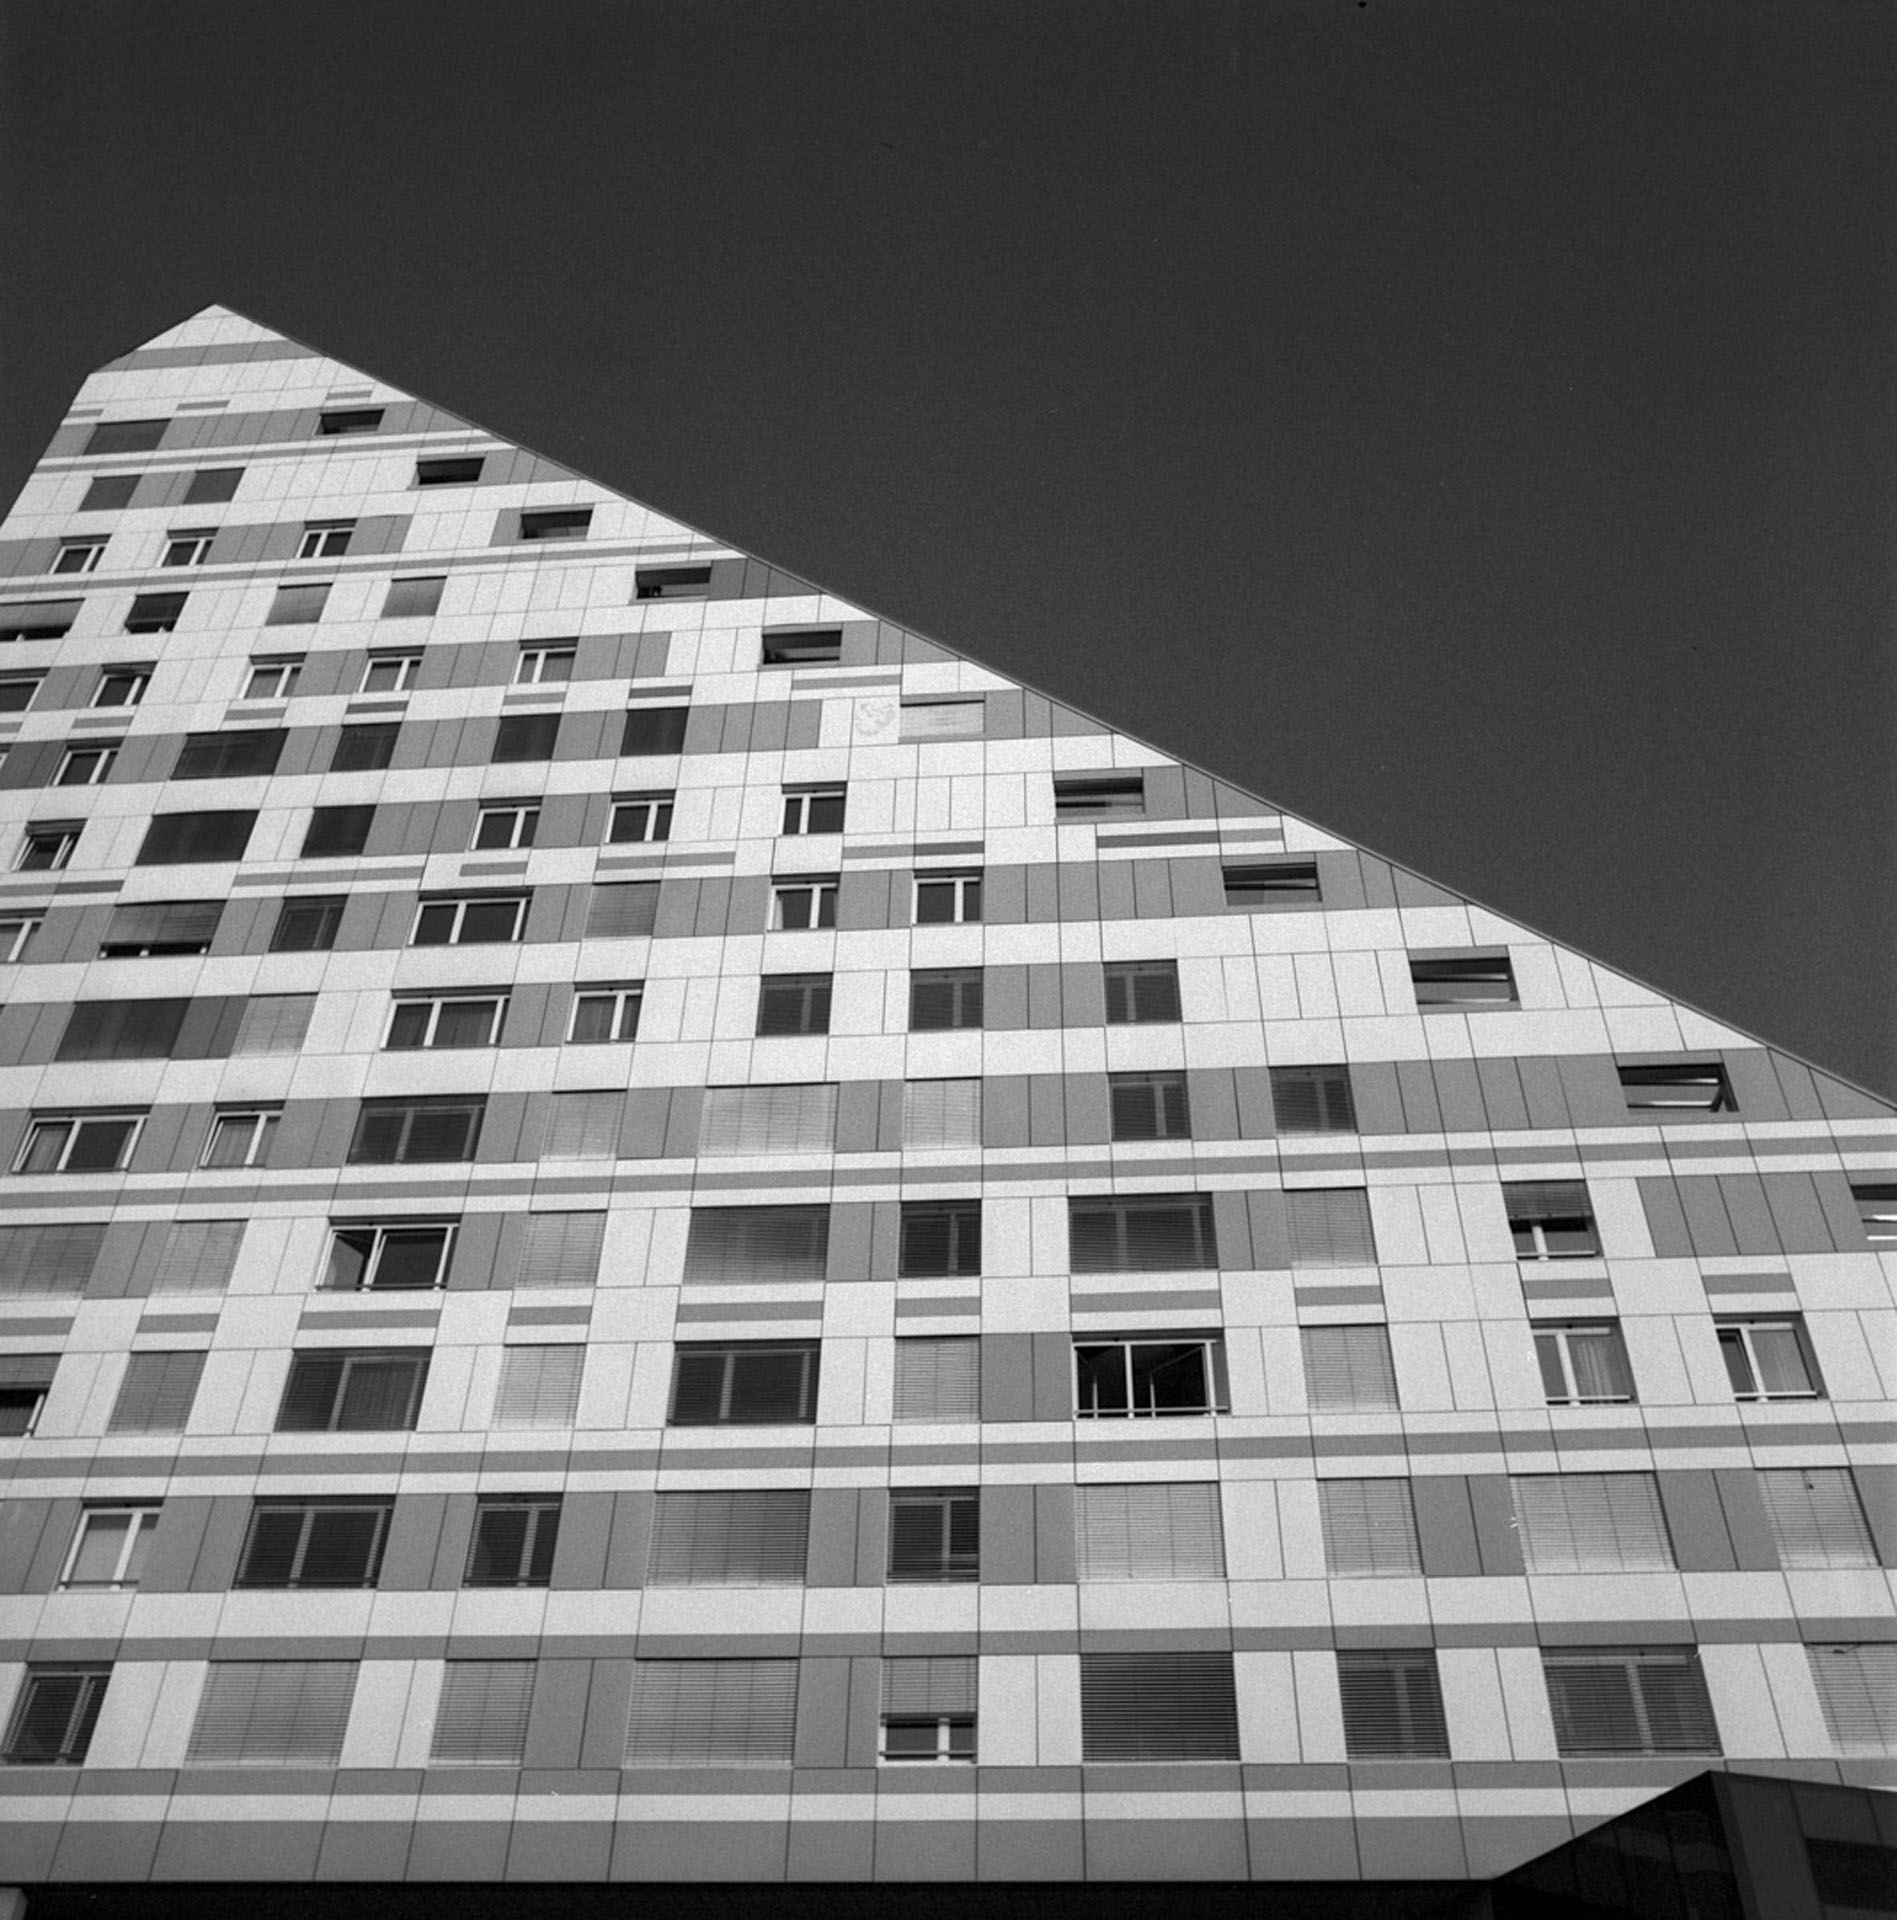 B/w geometries of buildings, Ljubljana Oct 2022 by David Hatters